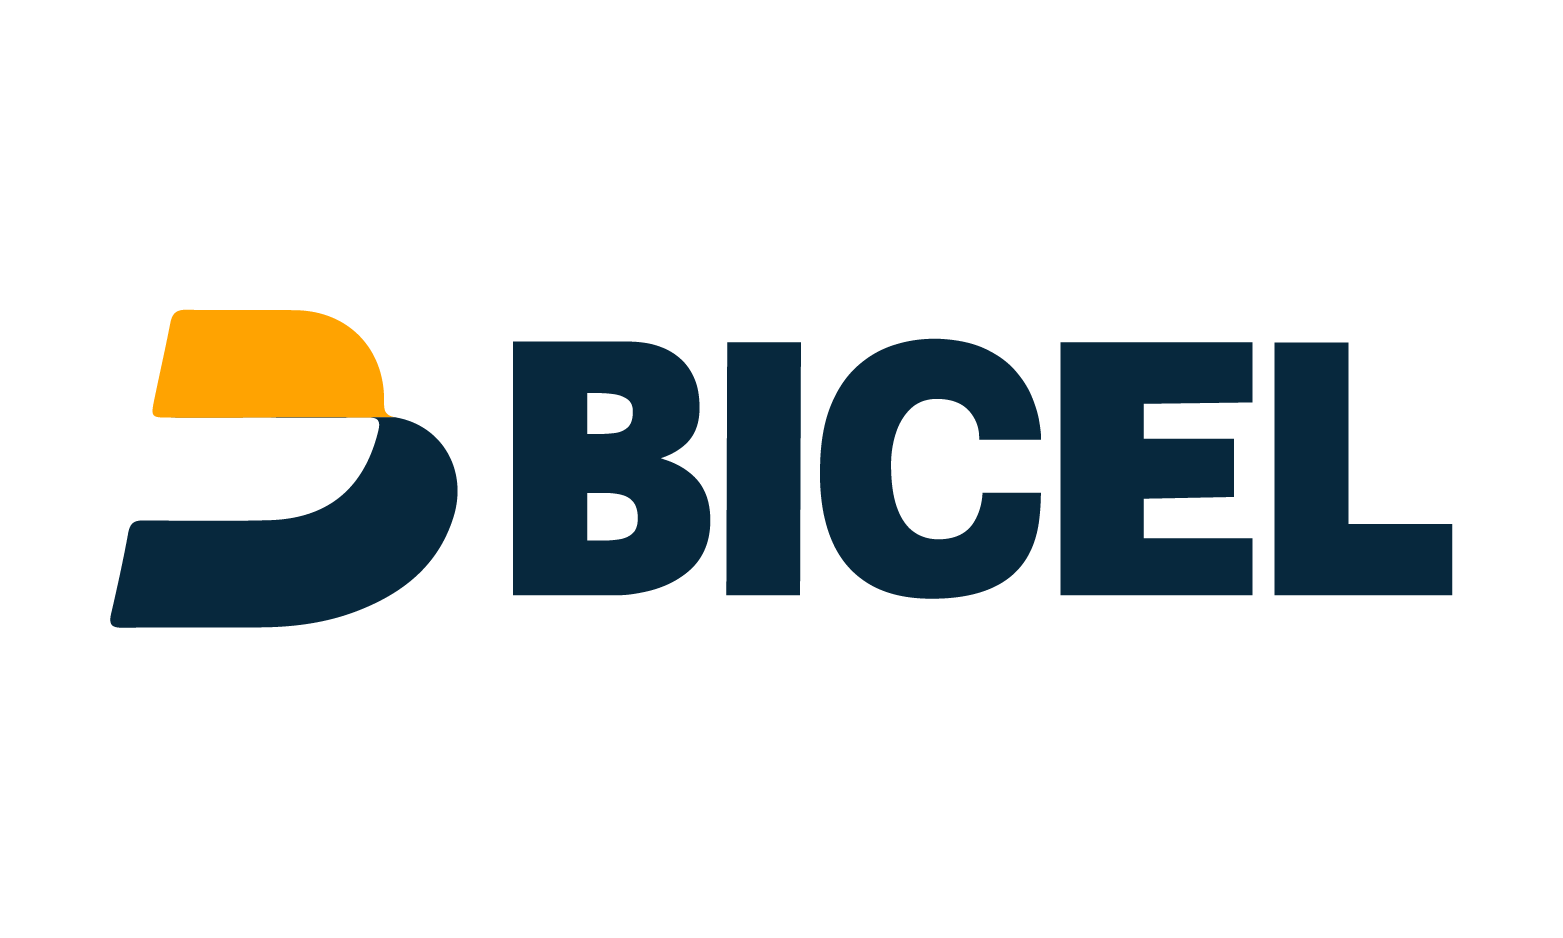 Bicel.com - Creative brandable domain for sale